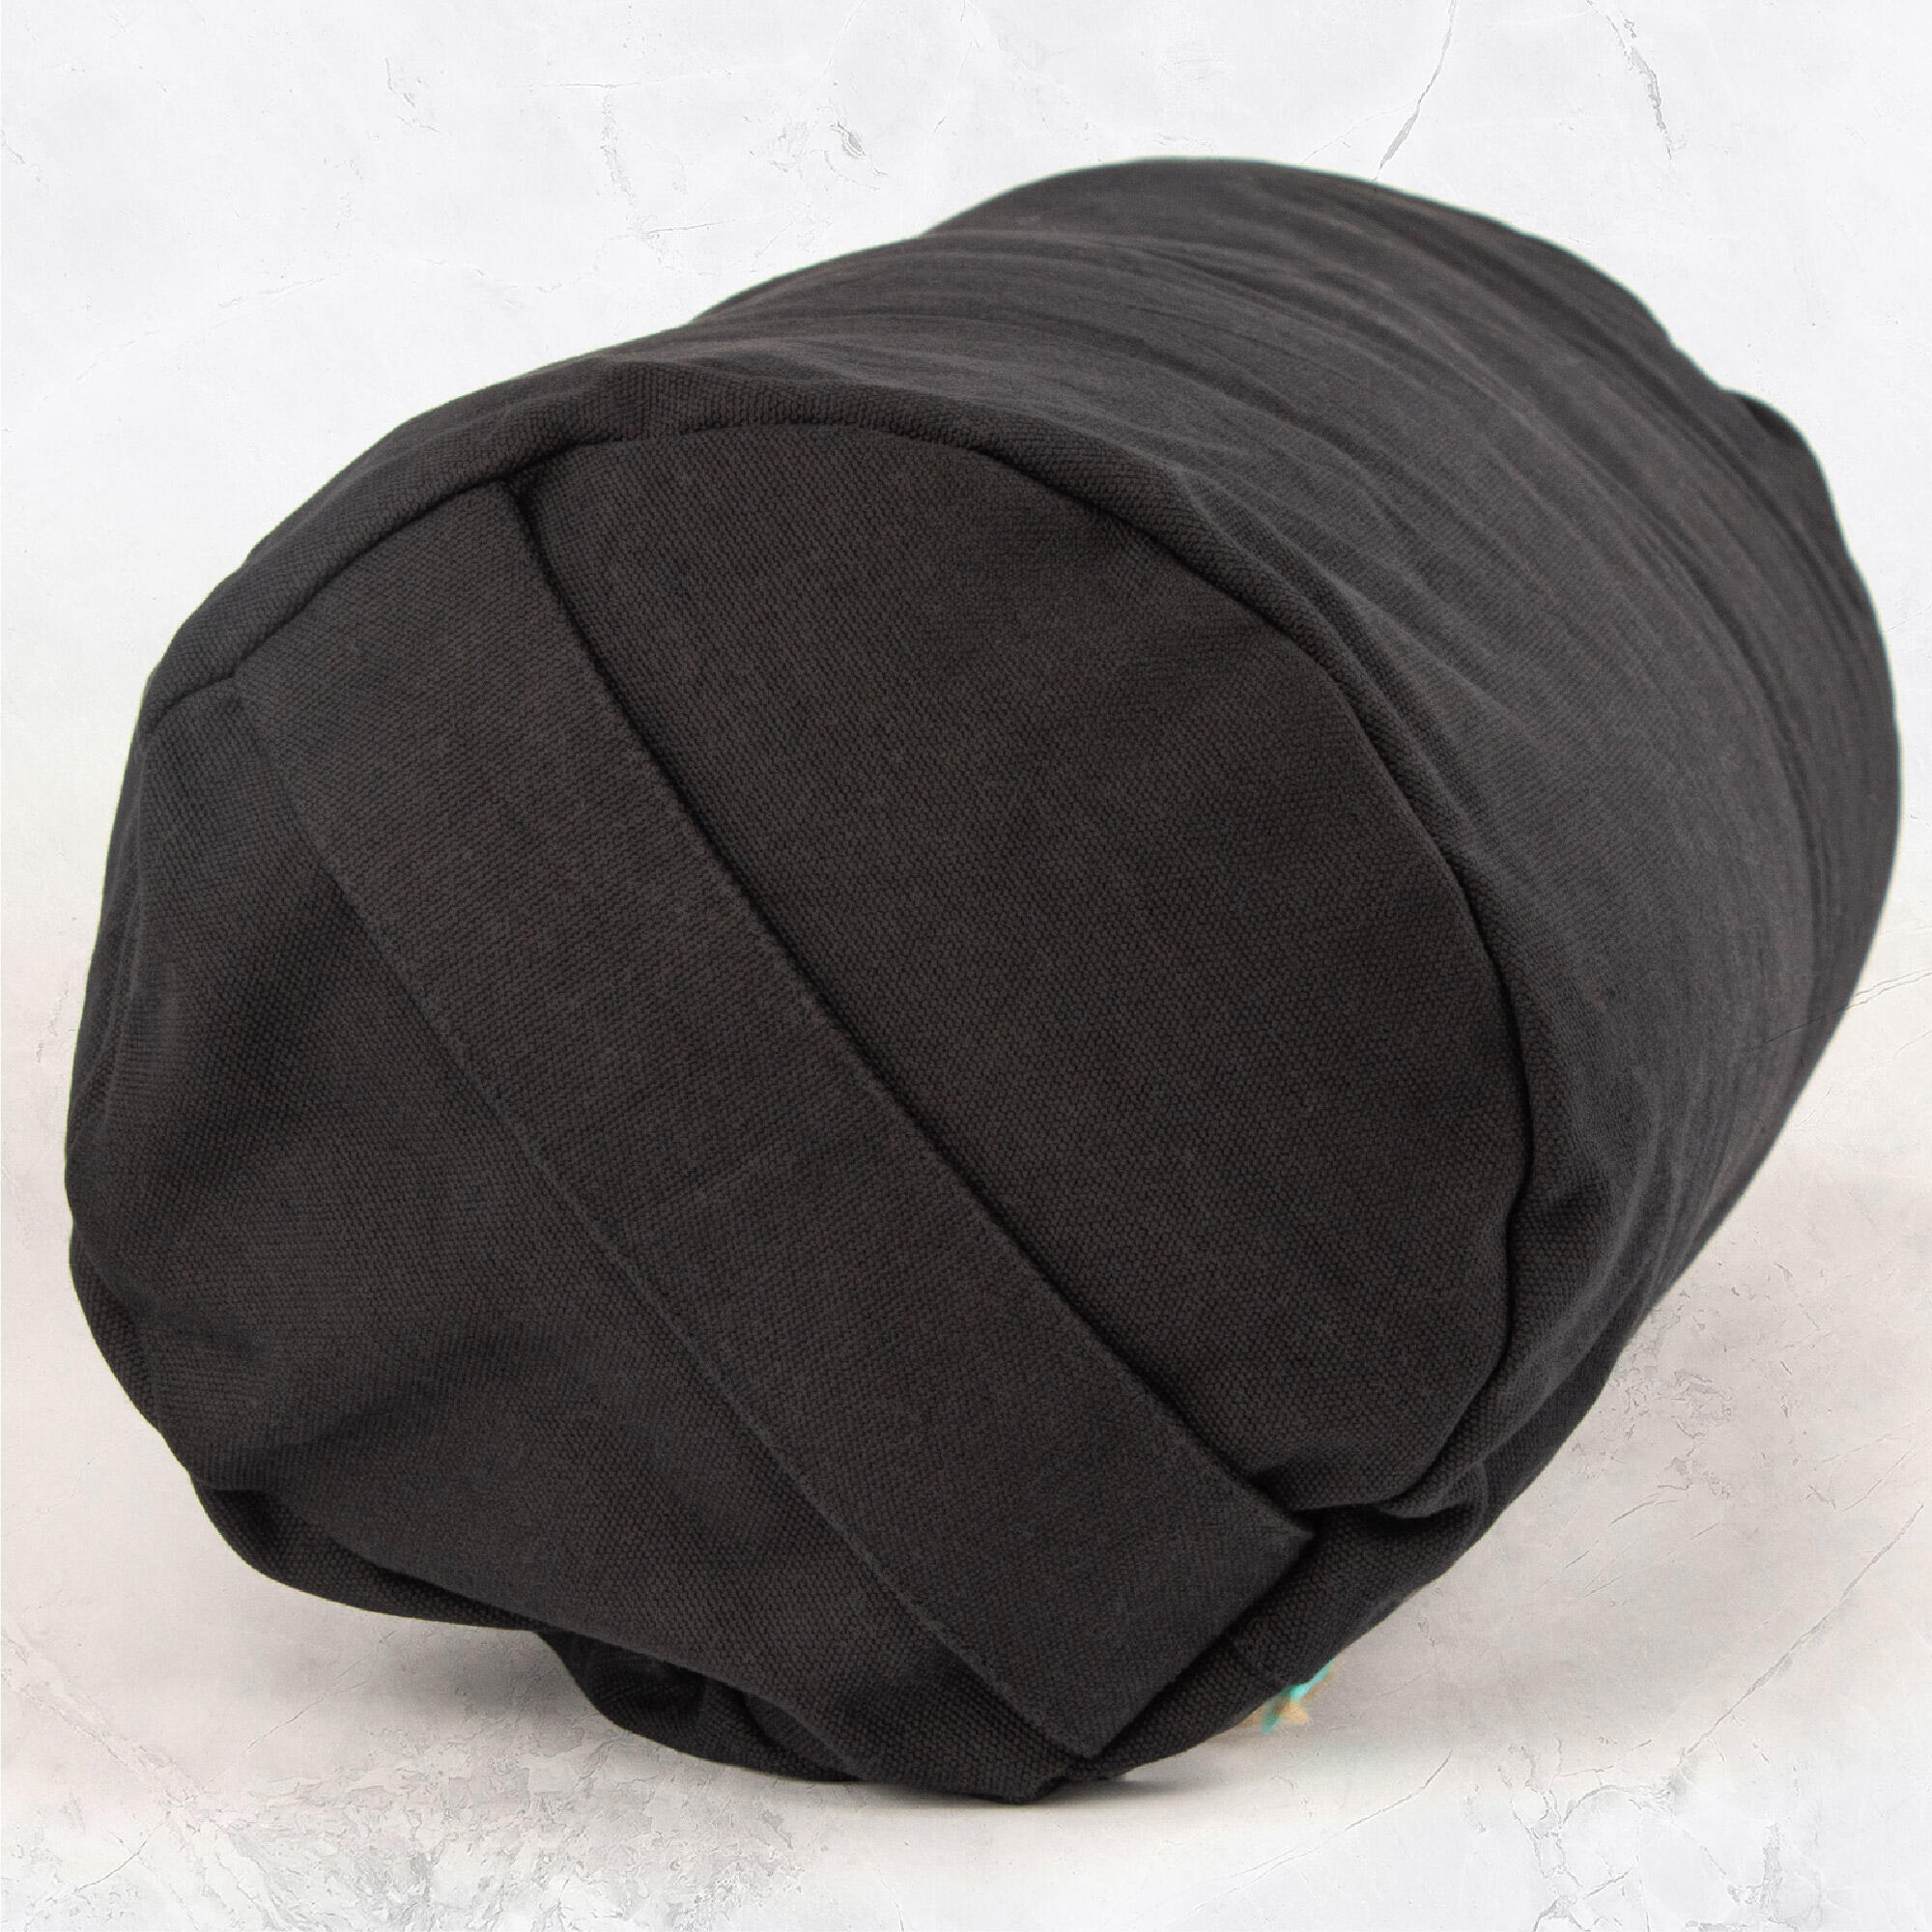 Myga Support Bolster Pillow - Black 4/8